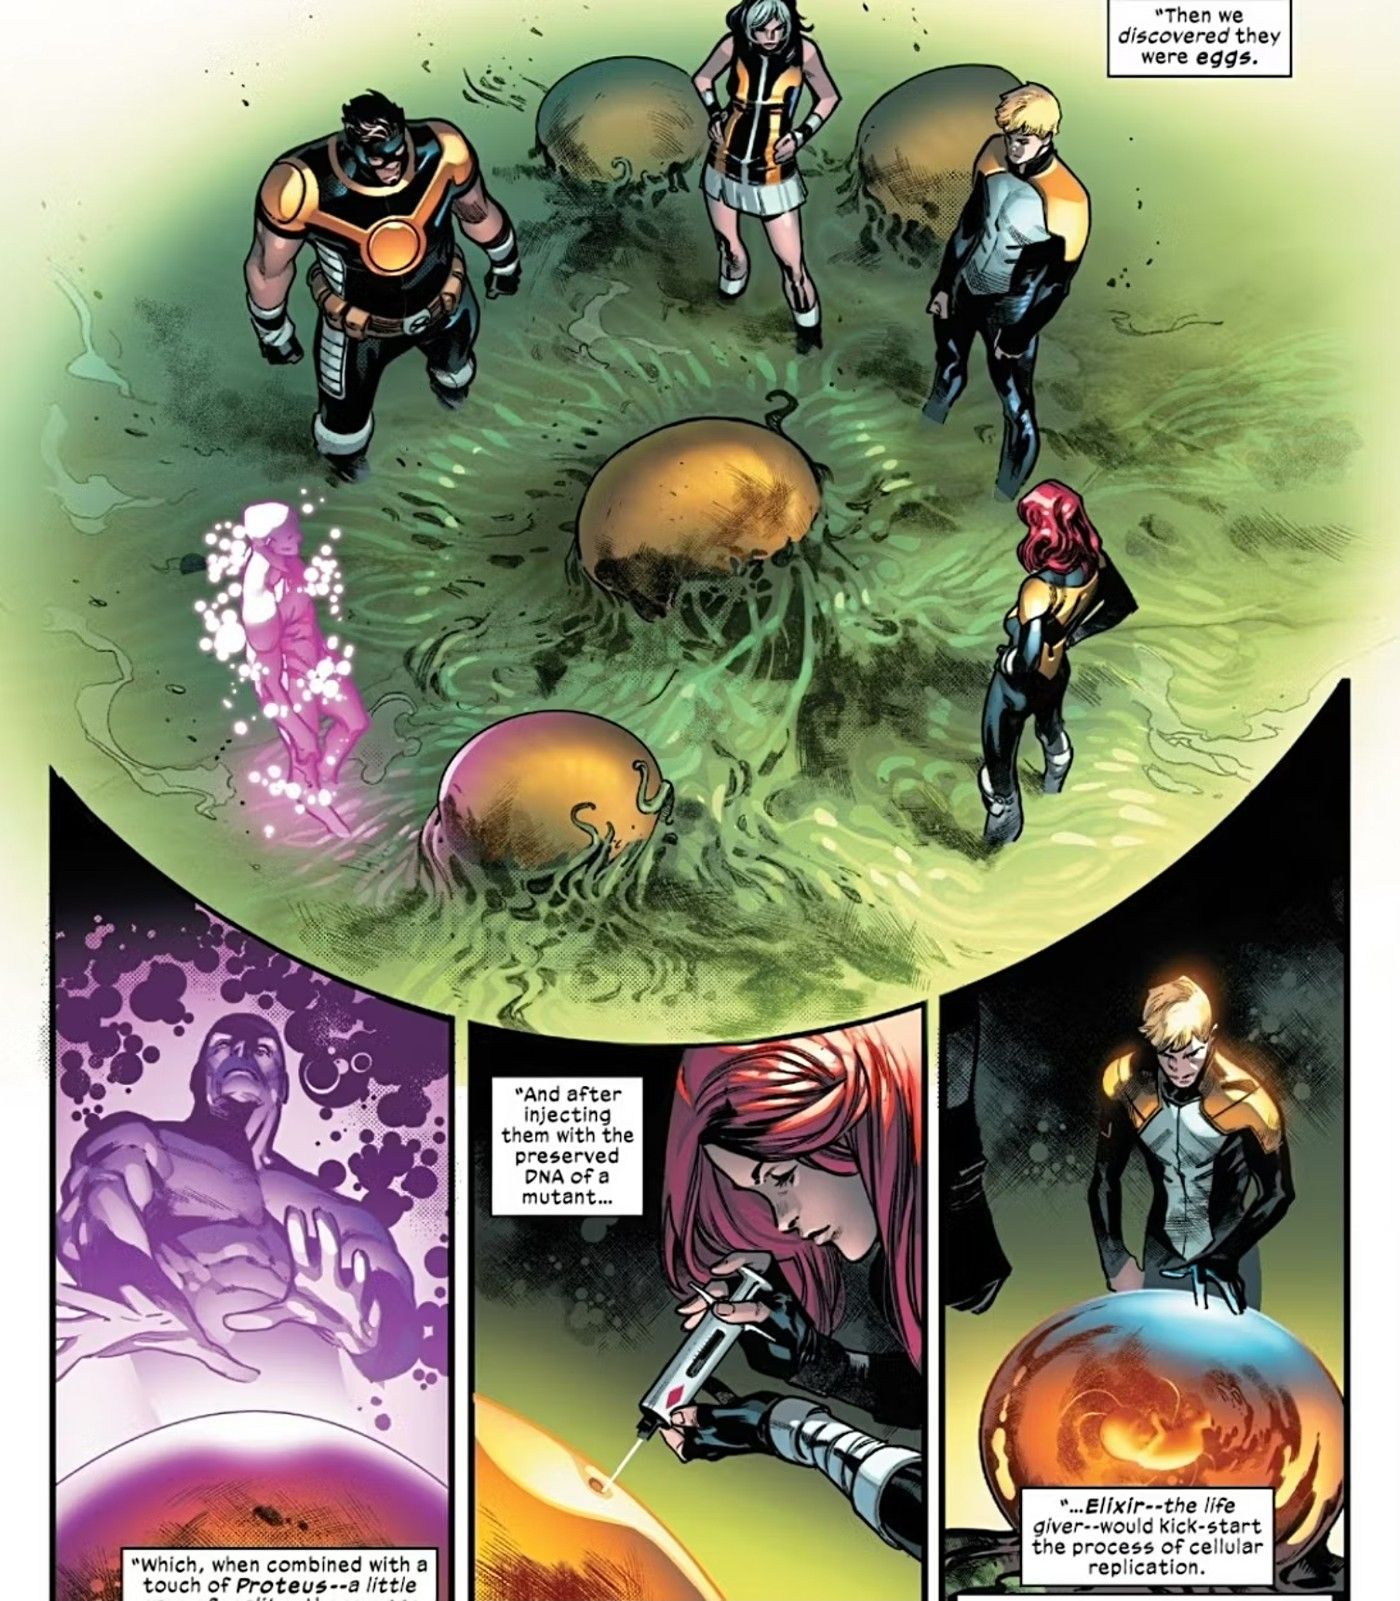 Krakoa's Five use their powers to enable mutant resurrection